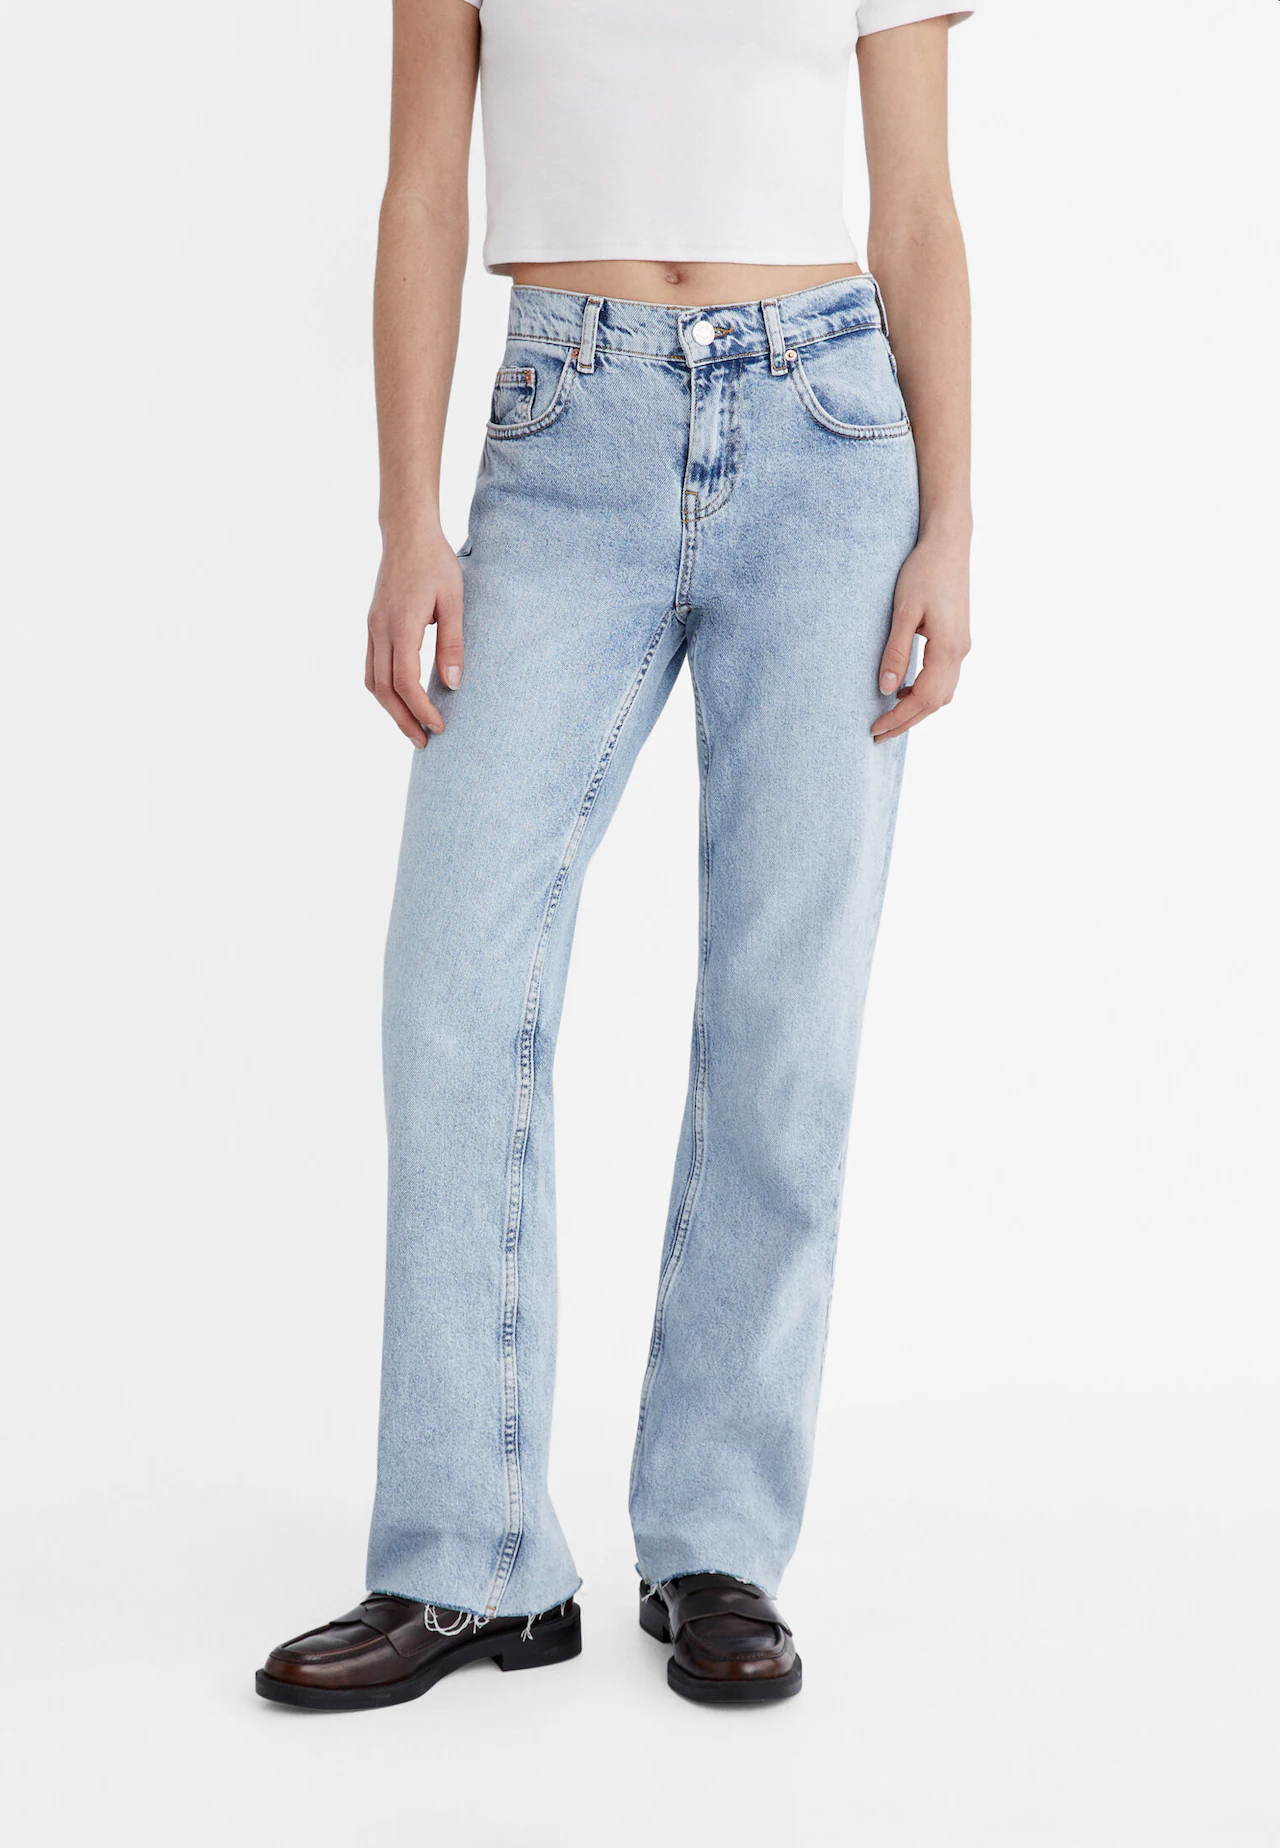 Low-cut straight fit jeans - Women's fashion